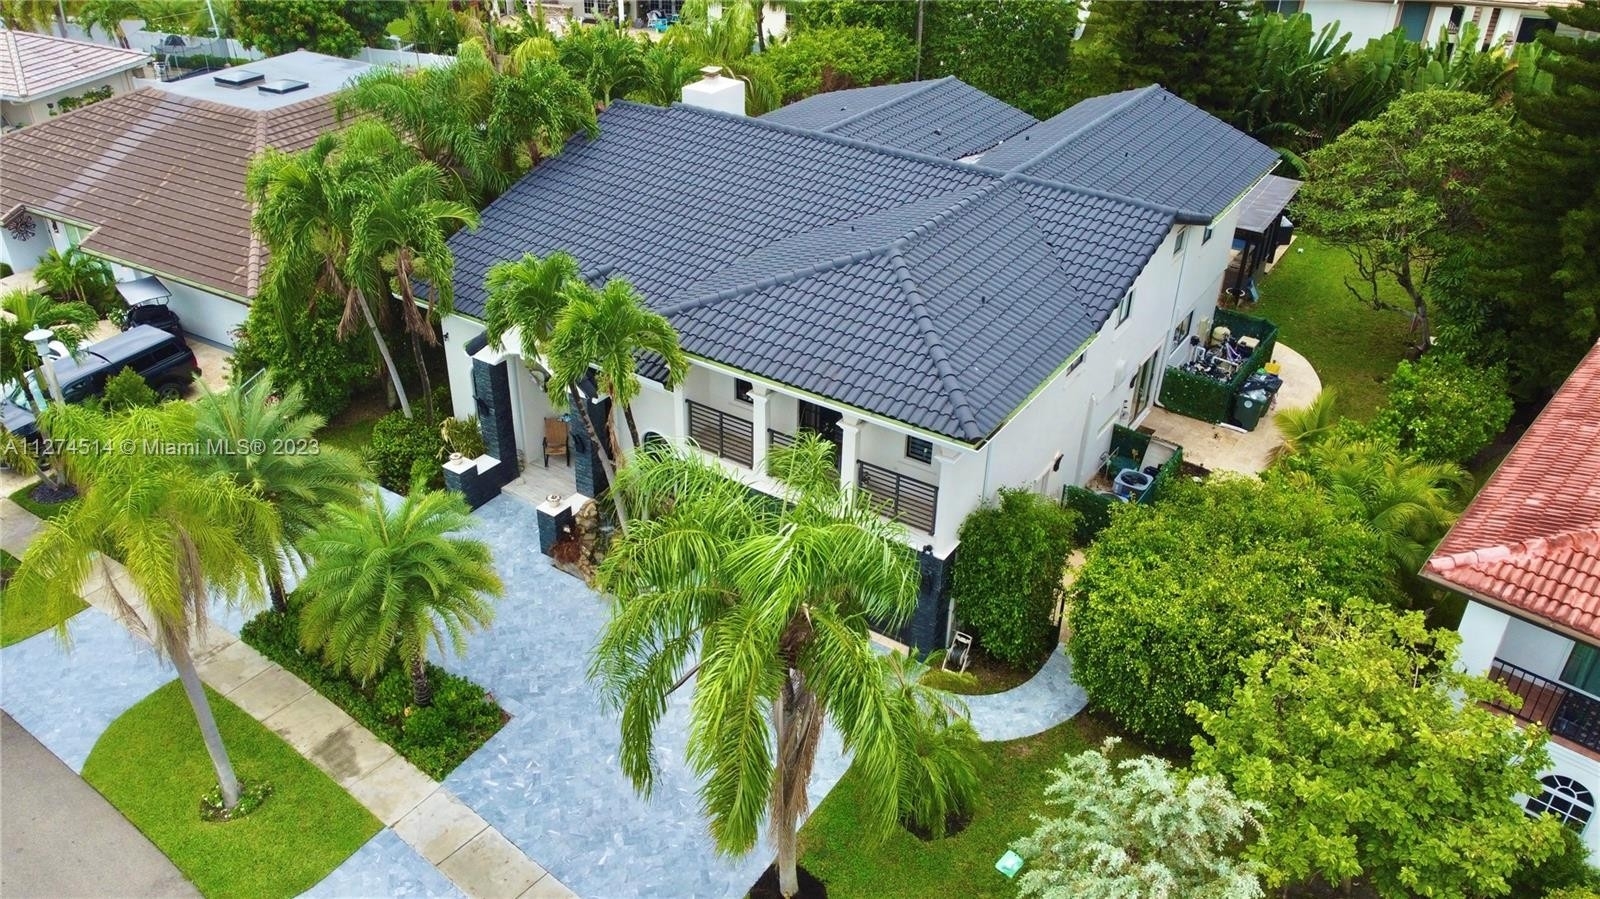 Single Family Home for Sale at Southeast Boca Raton, Boca Raton, FL 33487